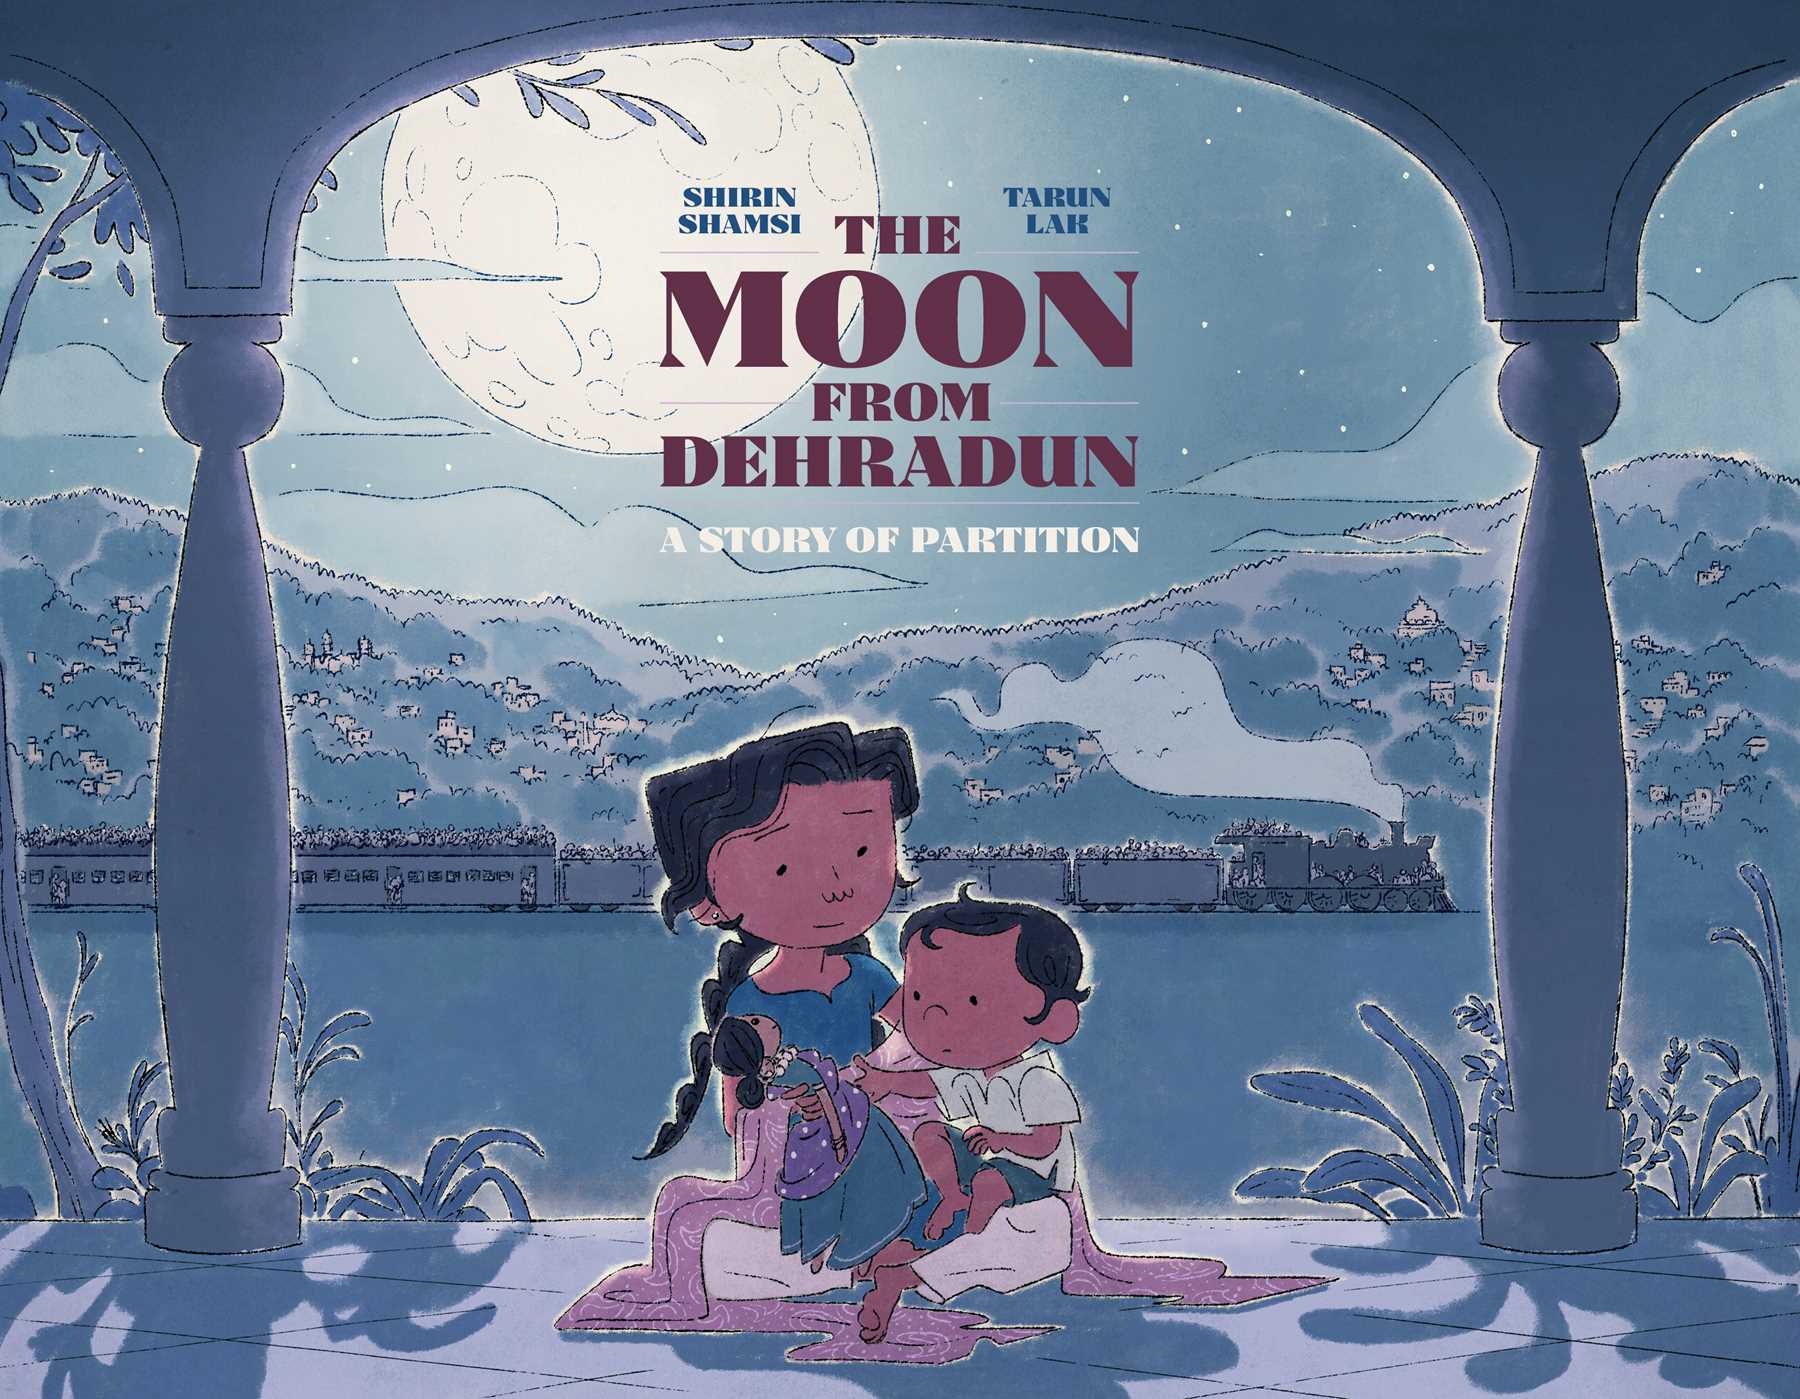 The Moon from Dehradun by Shamsi